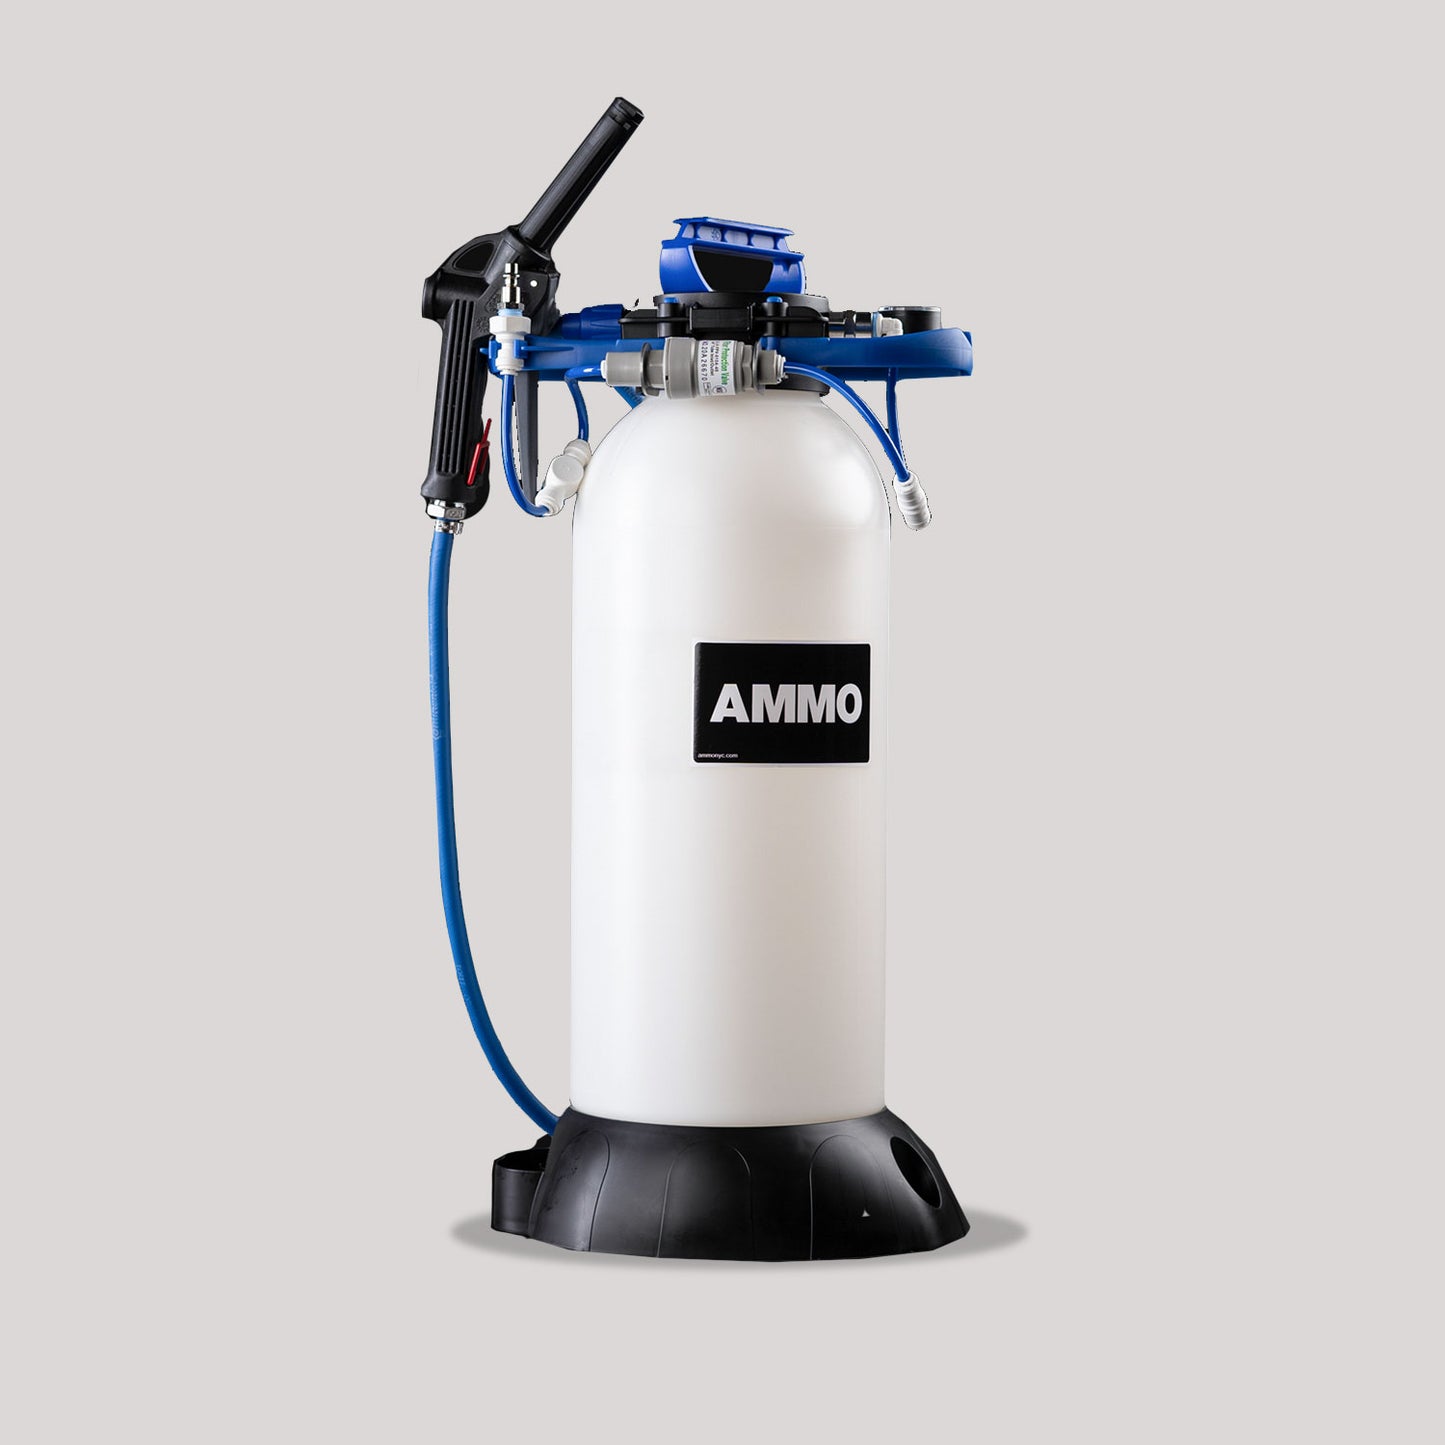 AMMO Pro Foamer – AMMONYC